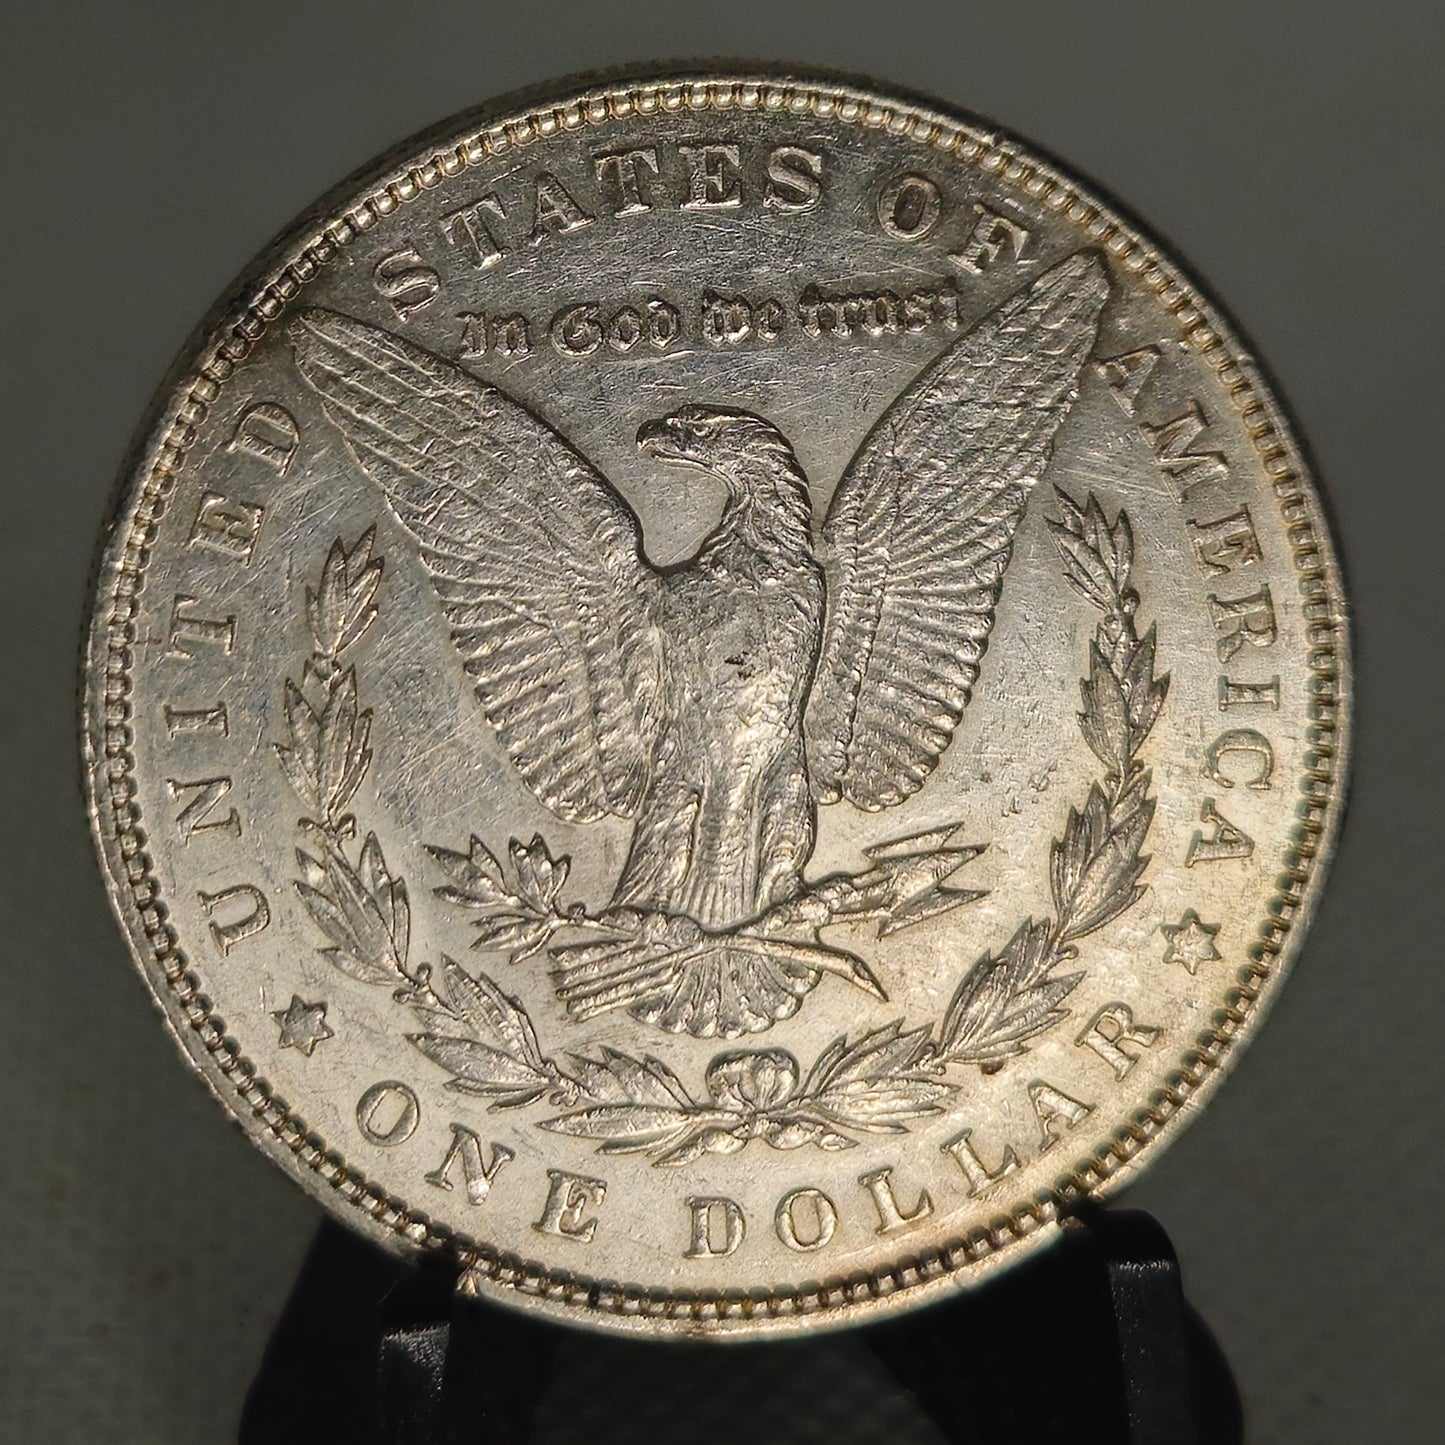 1889-P Morgan Dollar Ungraded Extra Fine Details